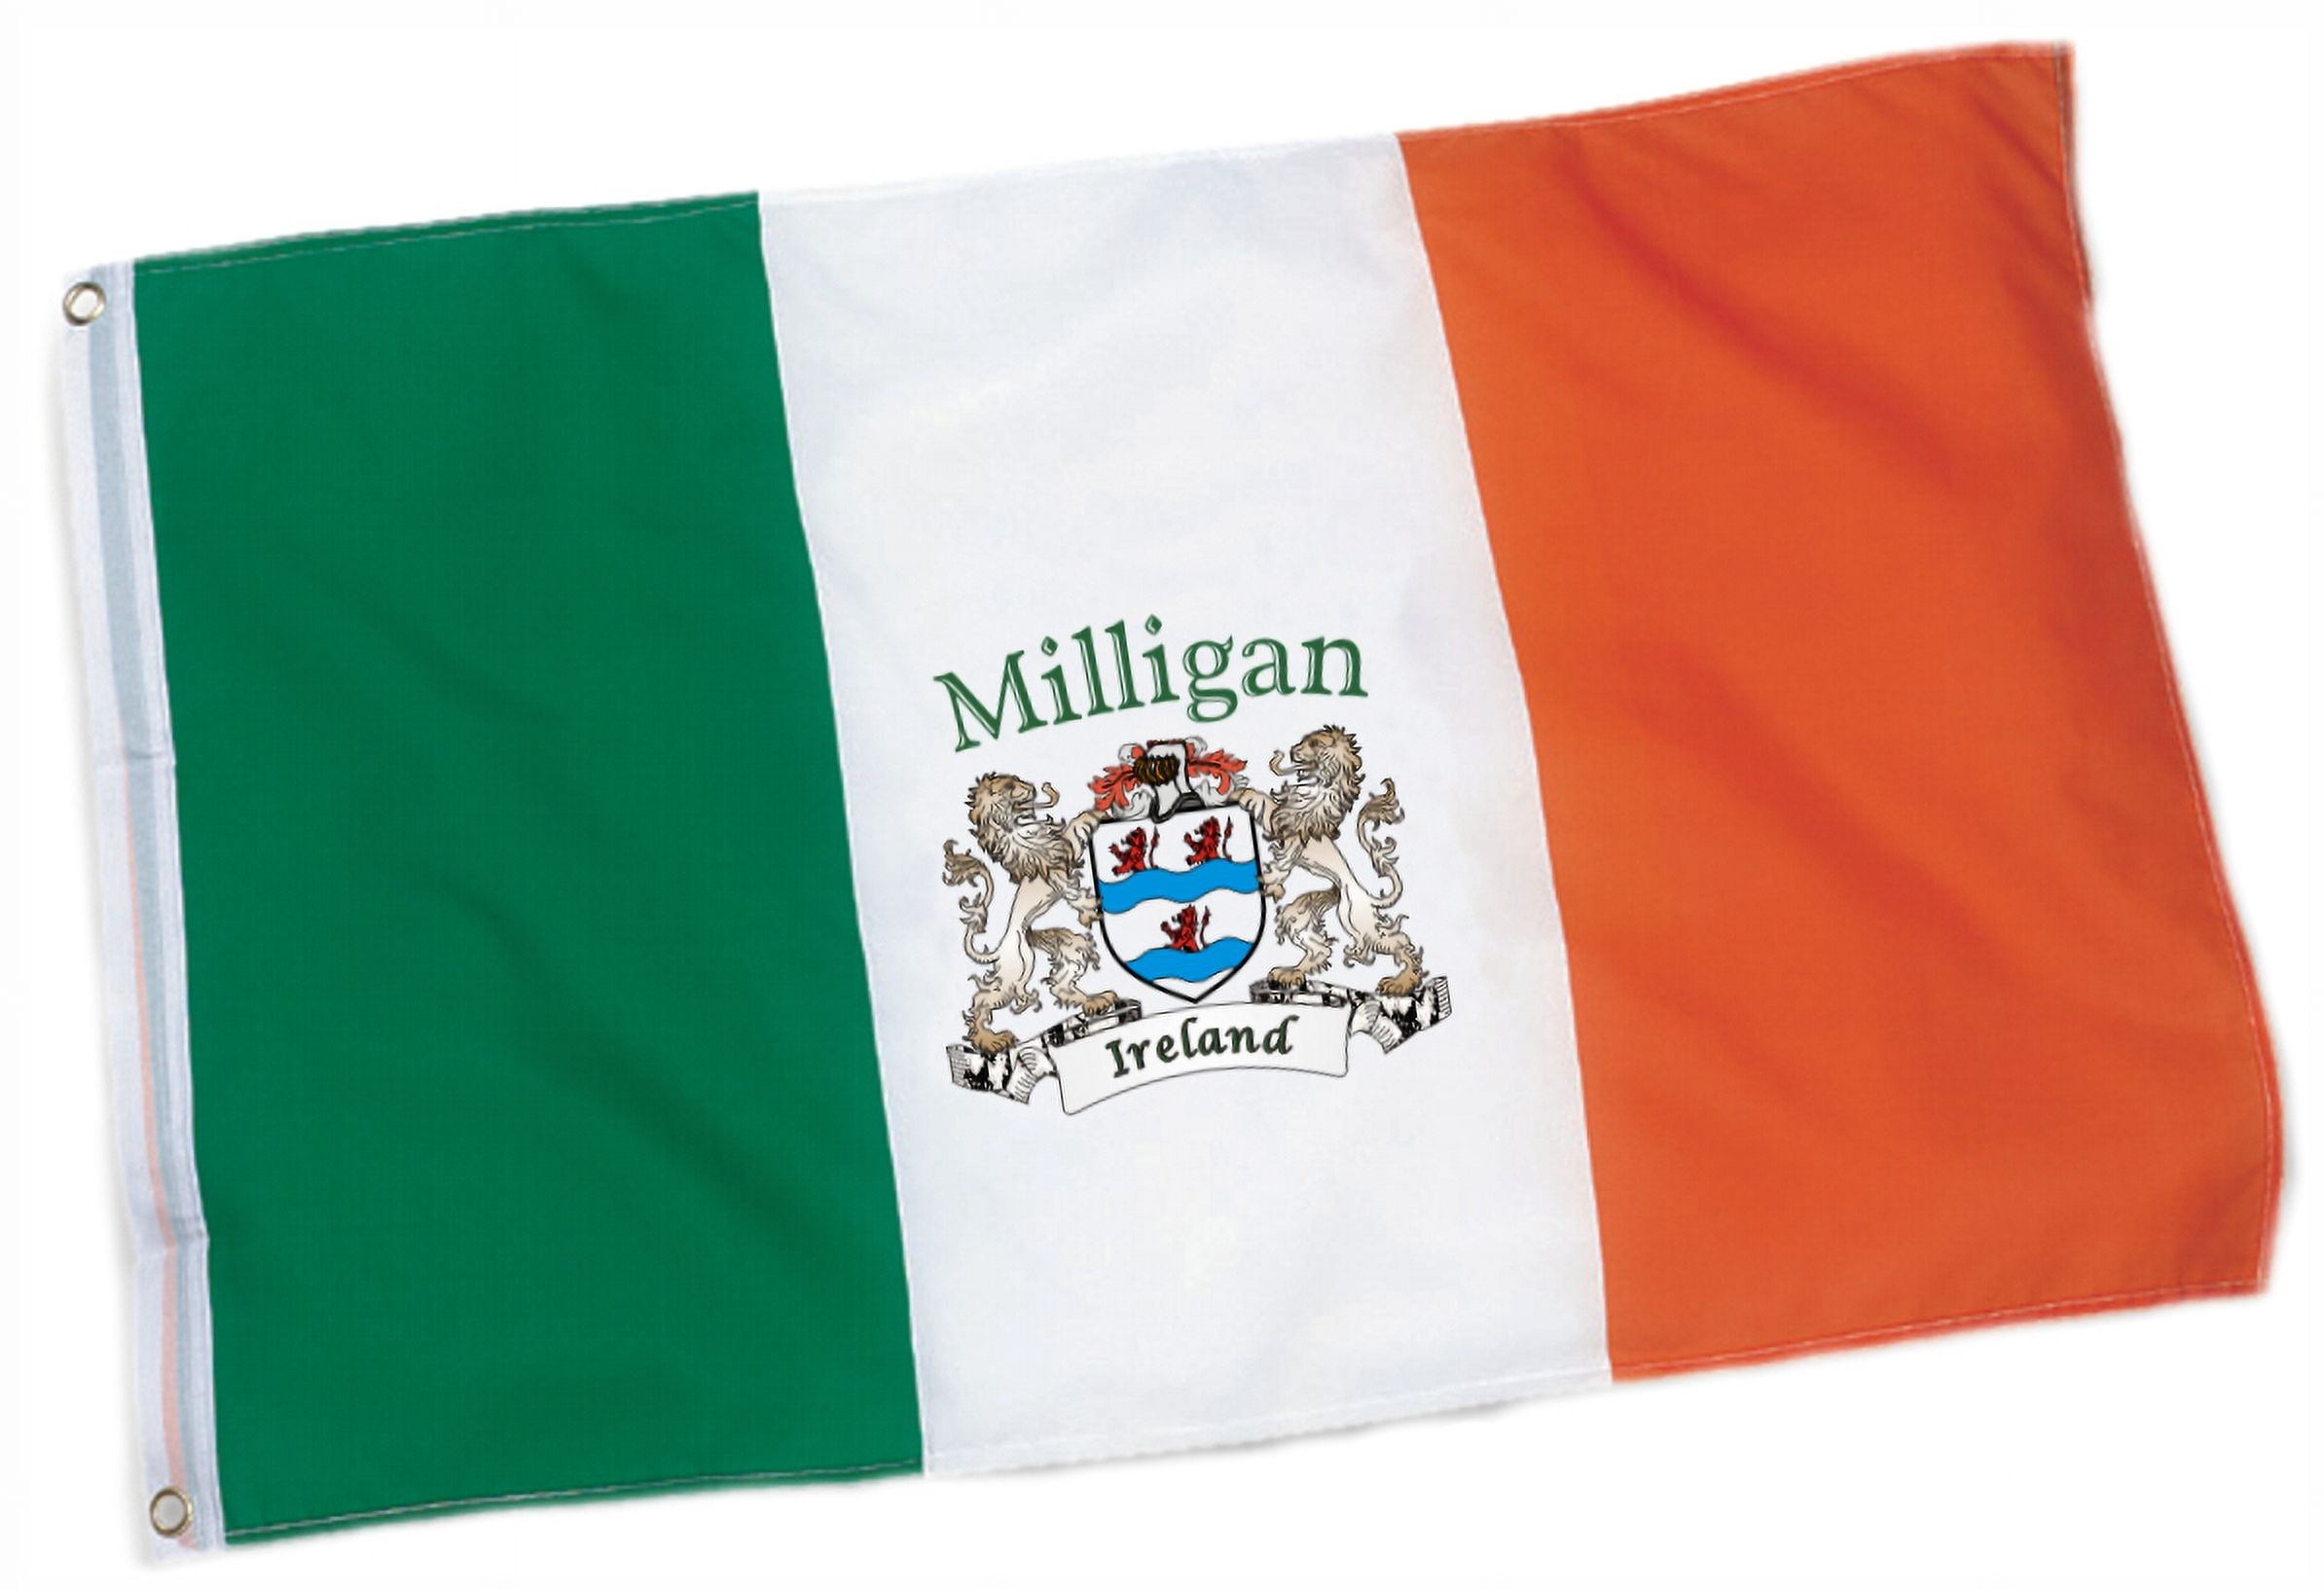 Milligan Irish Coat of Arms Ireland Flag - 3'x5' foot. - Walmart.com